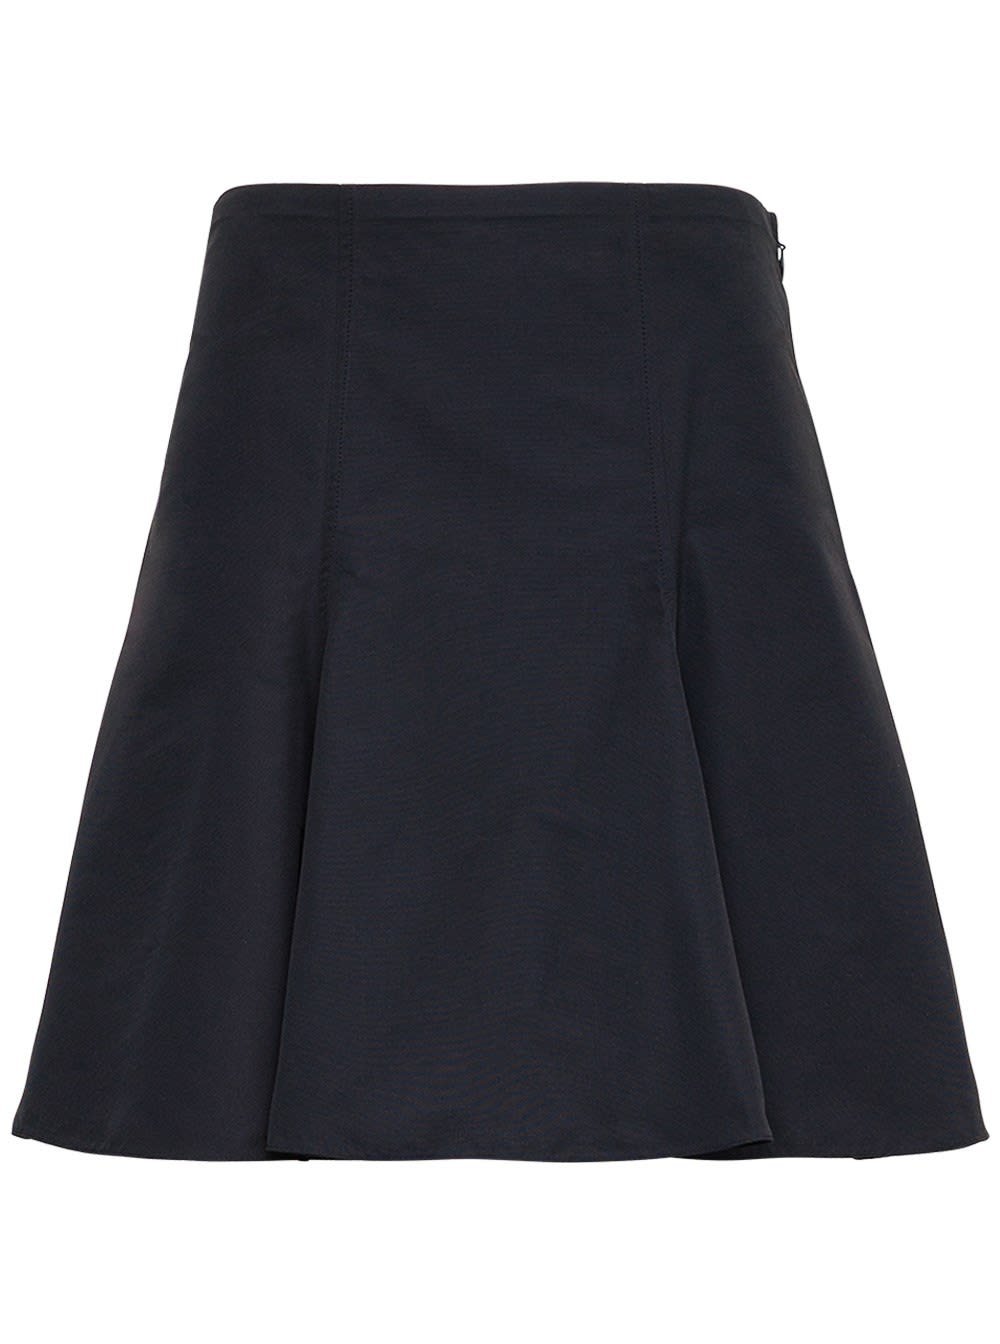 Valentino Black Micro Faille Skirt